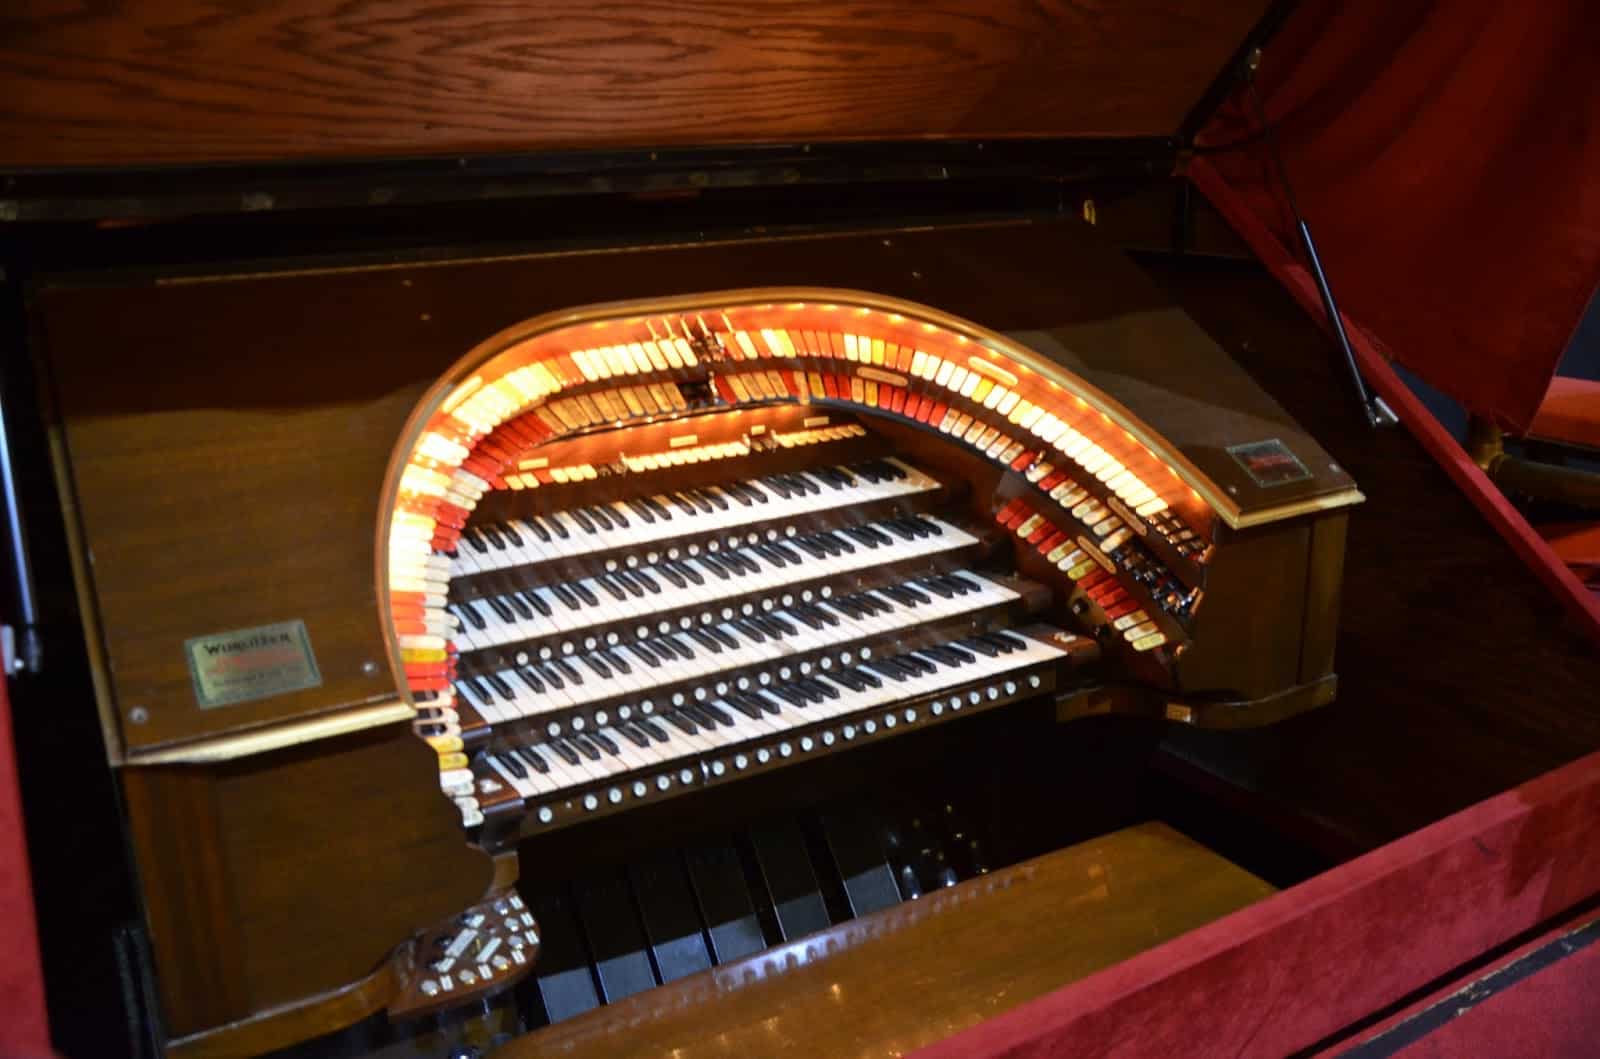 Wurlitzer organ at the Chicago Theatre on State Street